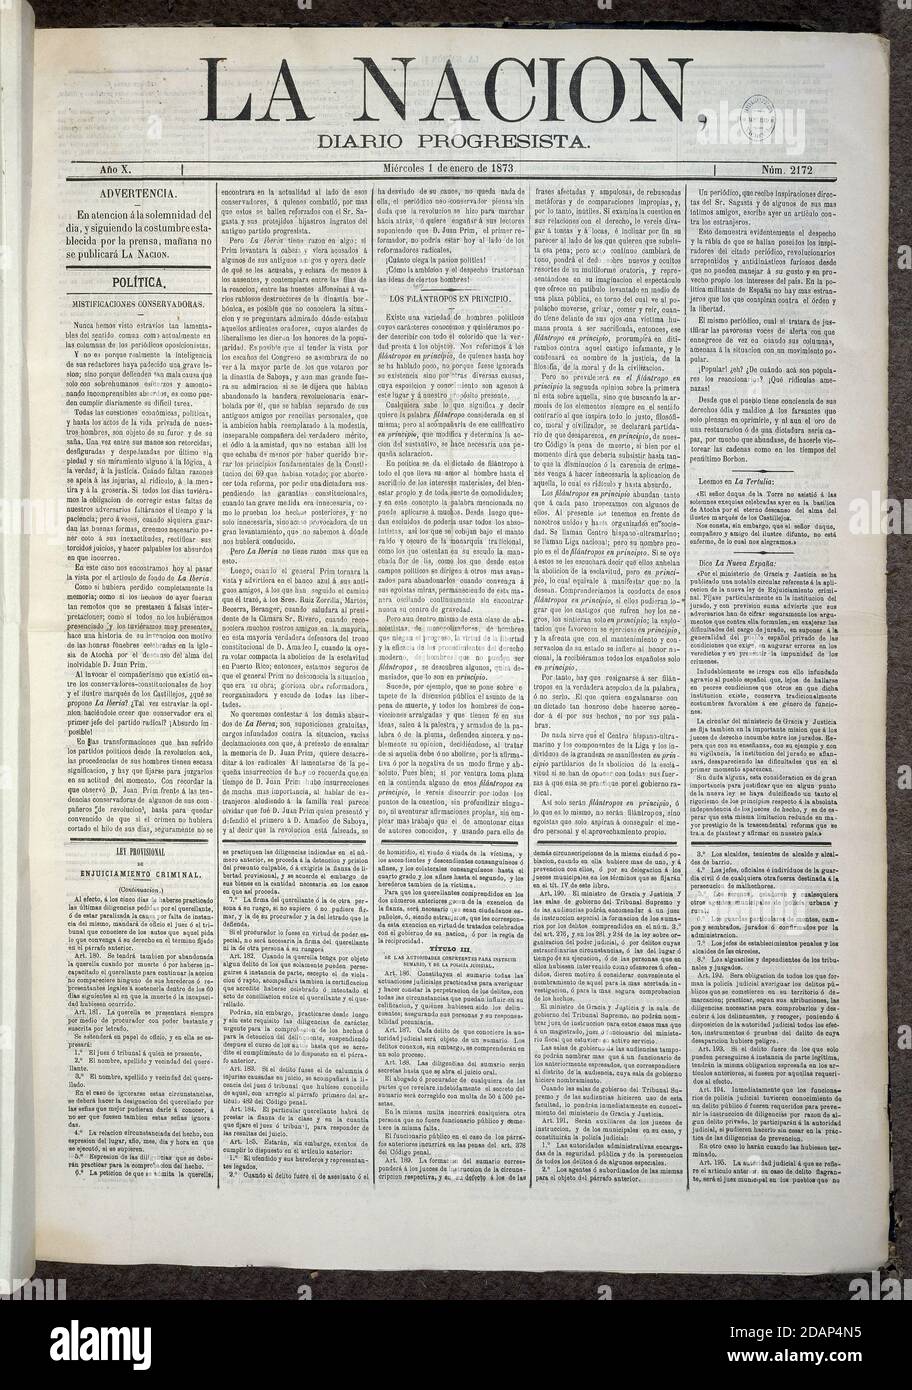 LA NACION 1873. Location: BIBLIOTECA NACIONAL-COLECCION. MADRID. SPAIN. Stock Photo